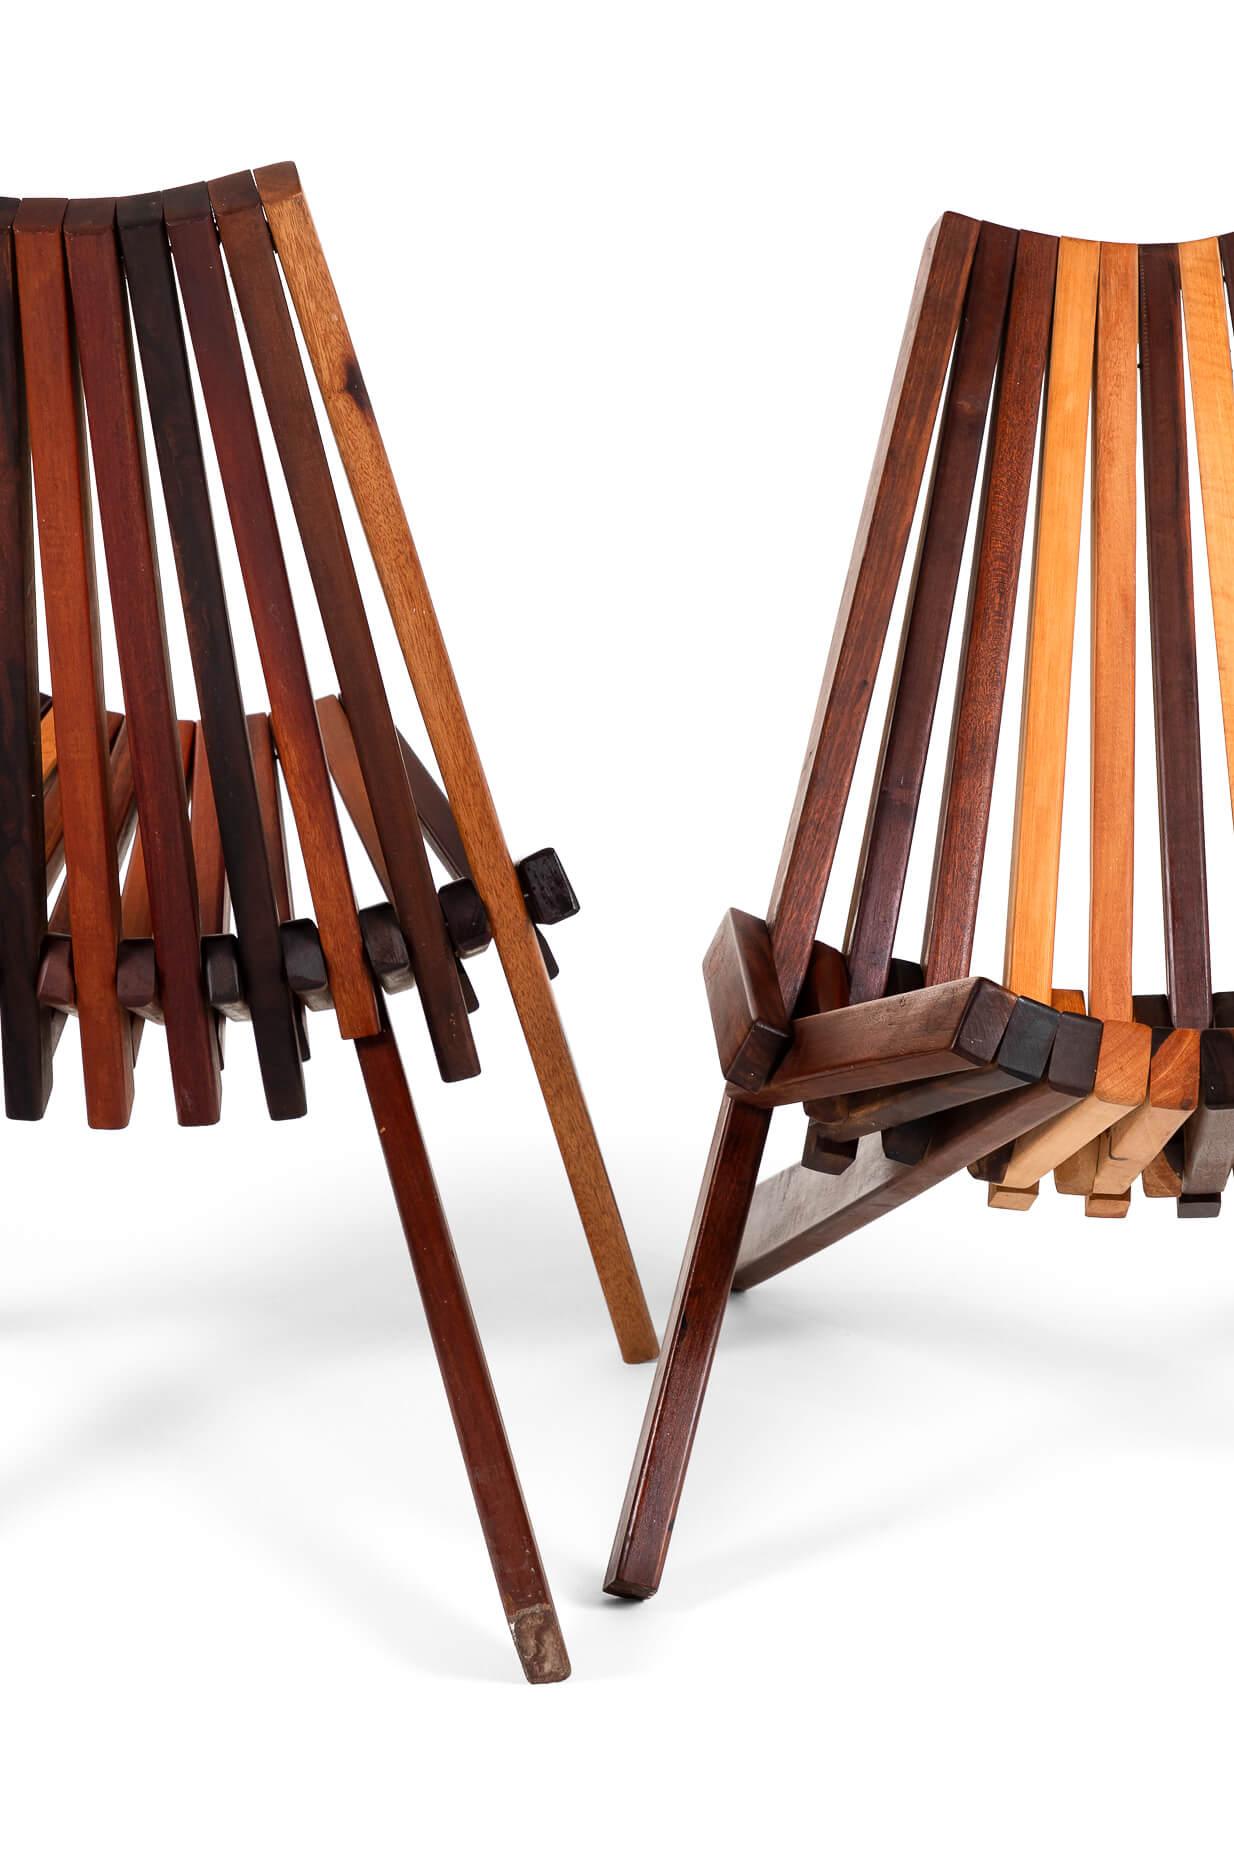 20th Century Pair of Scandinavian Folding Teak Chairs For Sale